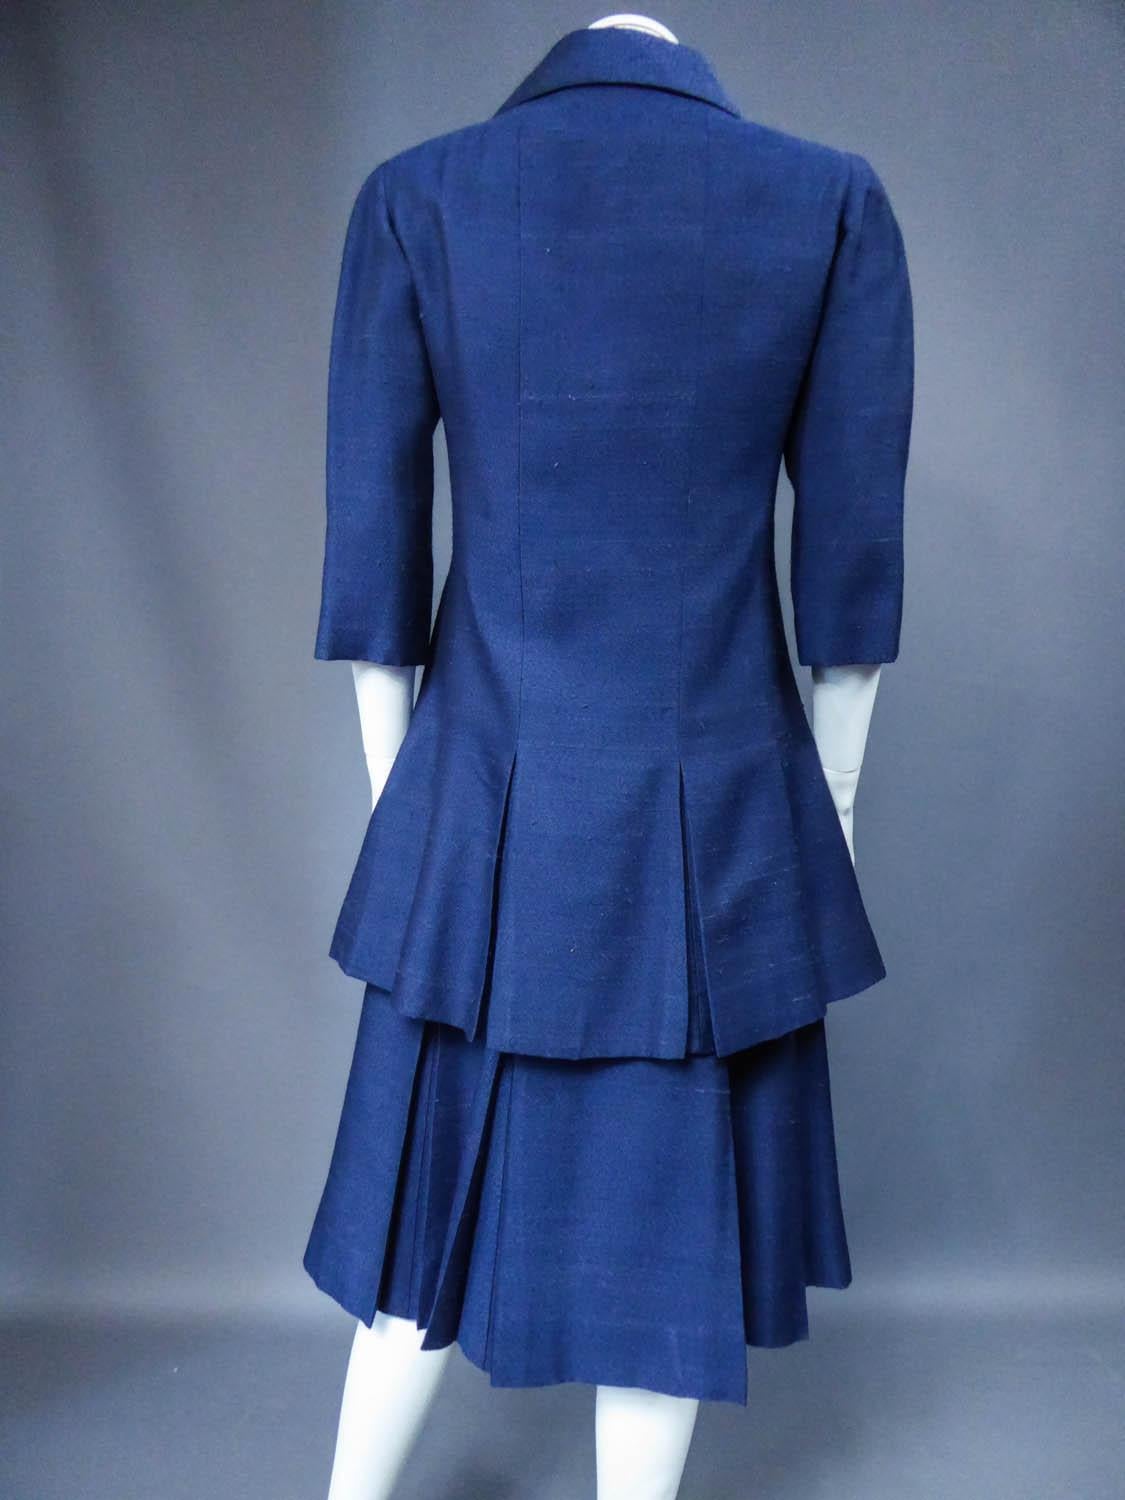 Jacques Heim Couture Dress and Jacket Set Circa 1956 2